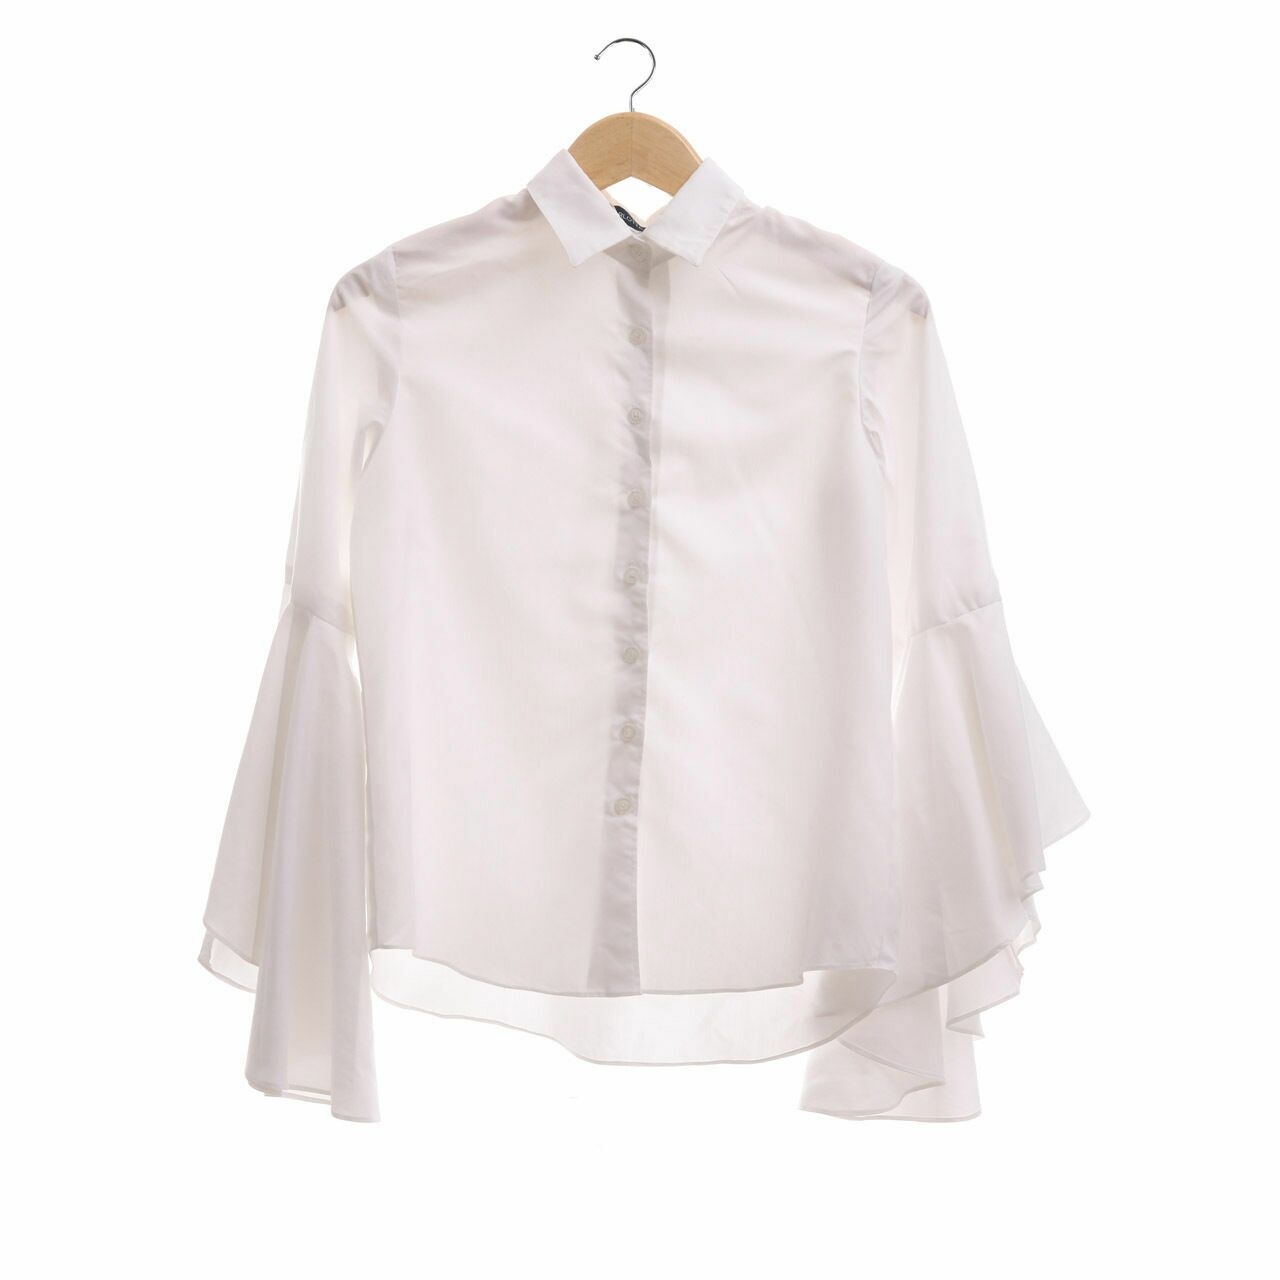 Charlotta Atelier White Shirt